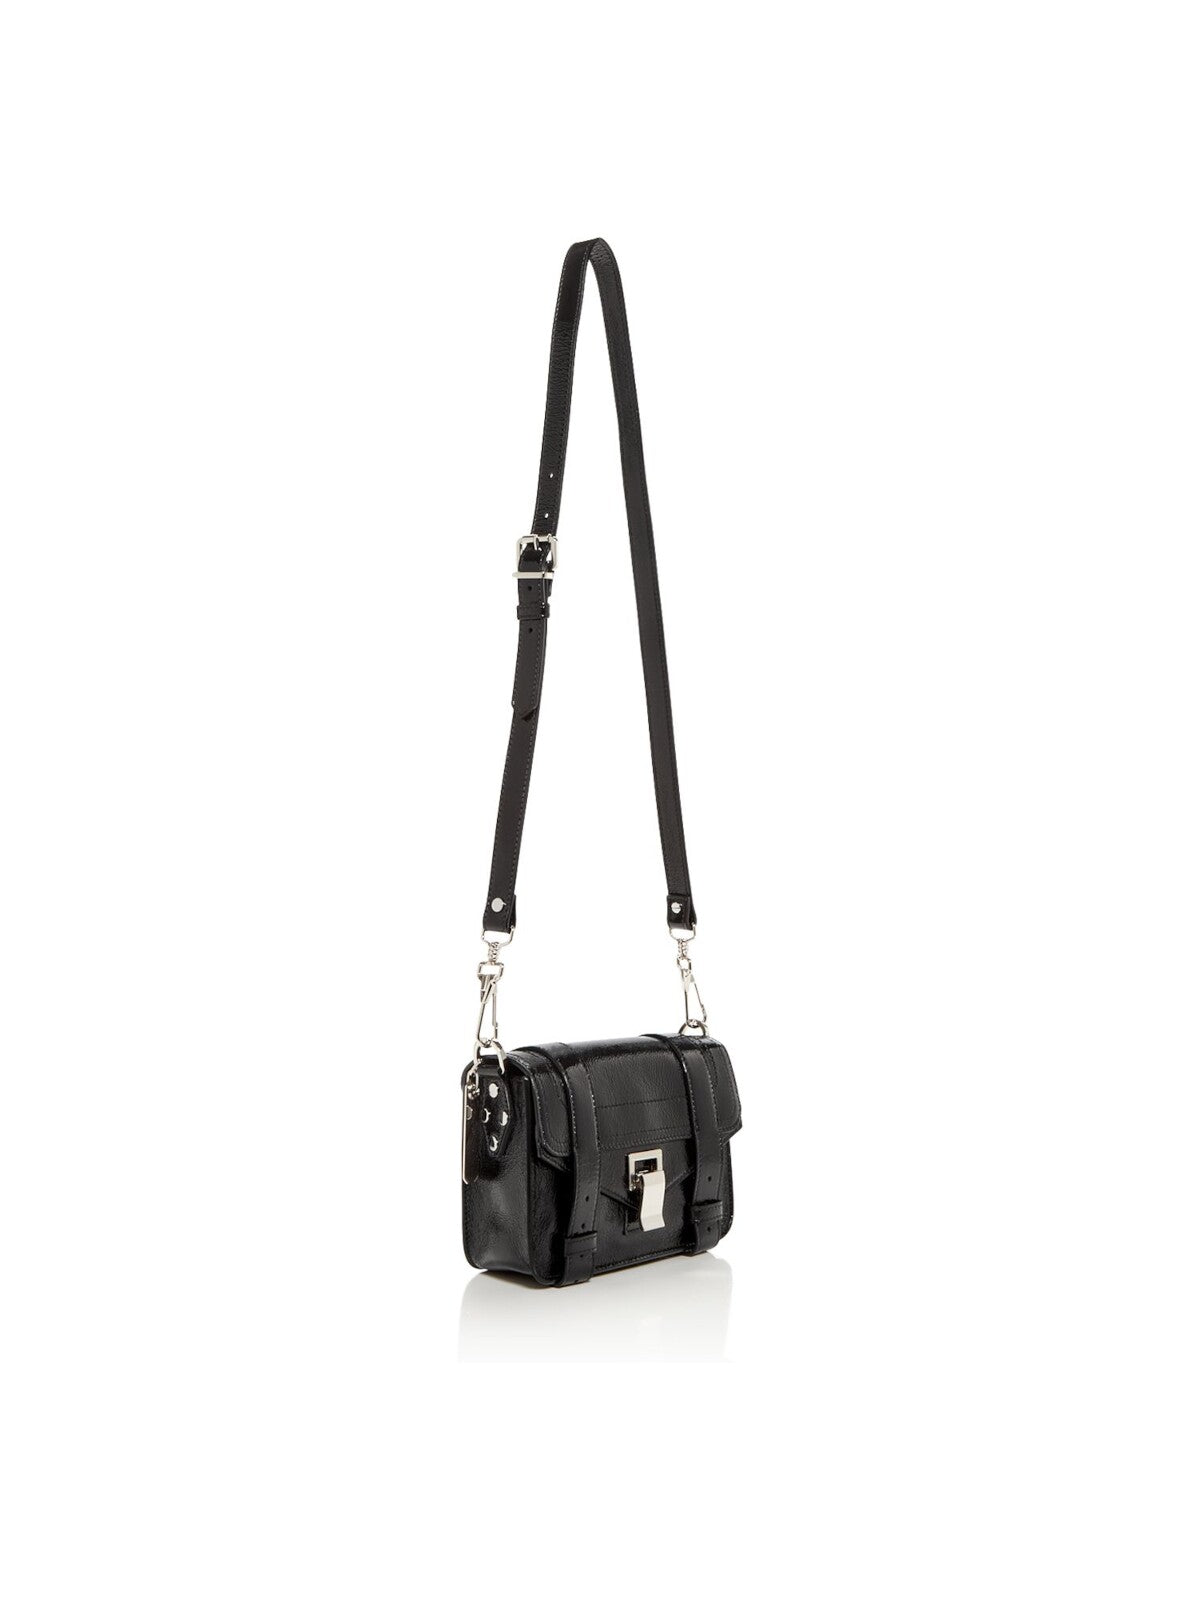 PROENZA SCHOULER Women's Black Solid Silver-Tone Hardware Crinkled Adjustable Strap Crossbody Handbag Purse